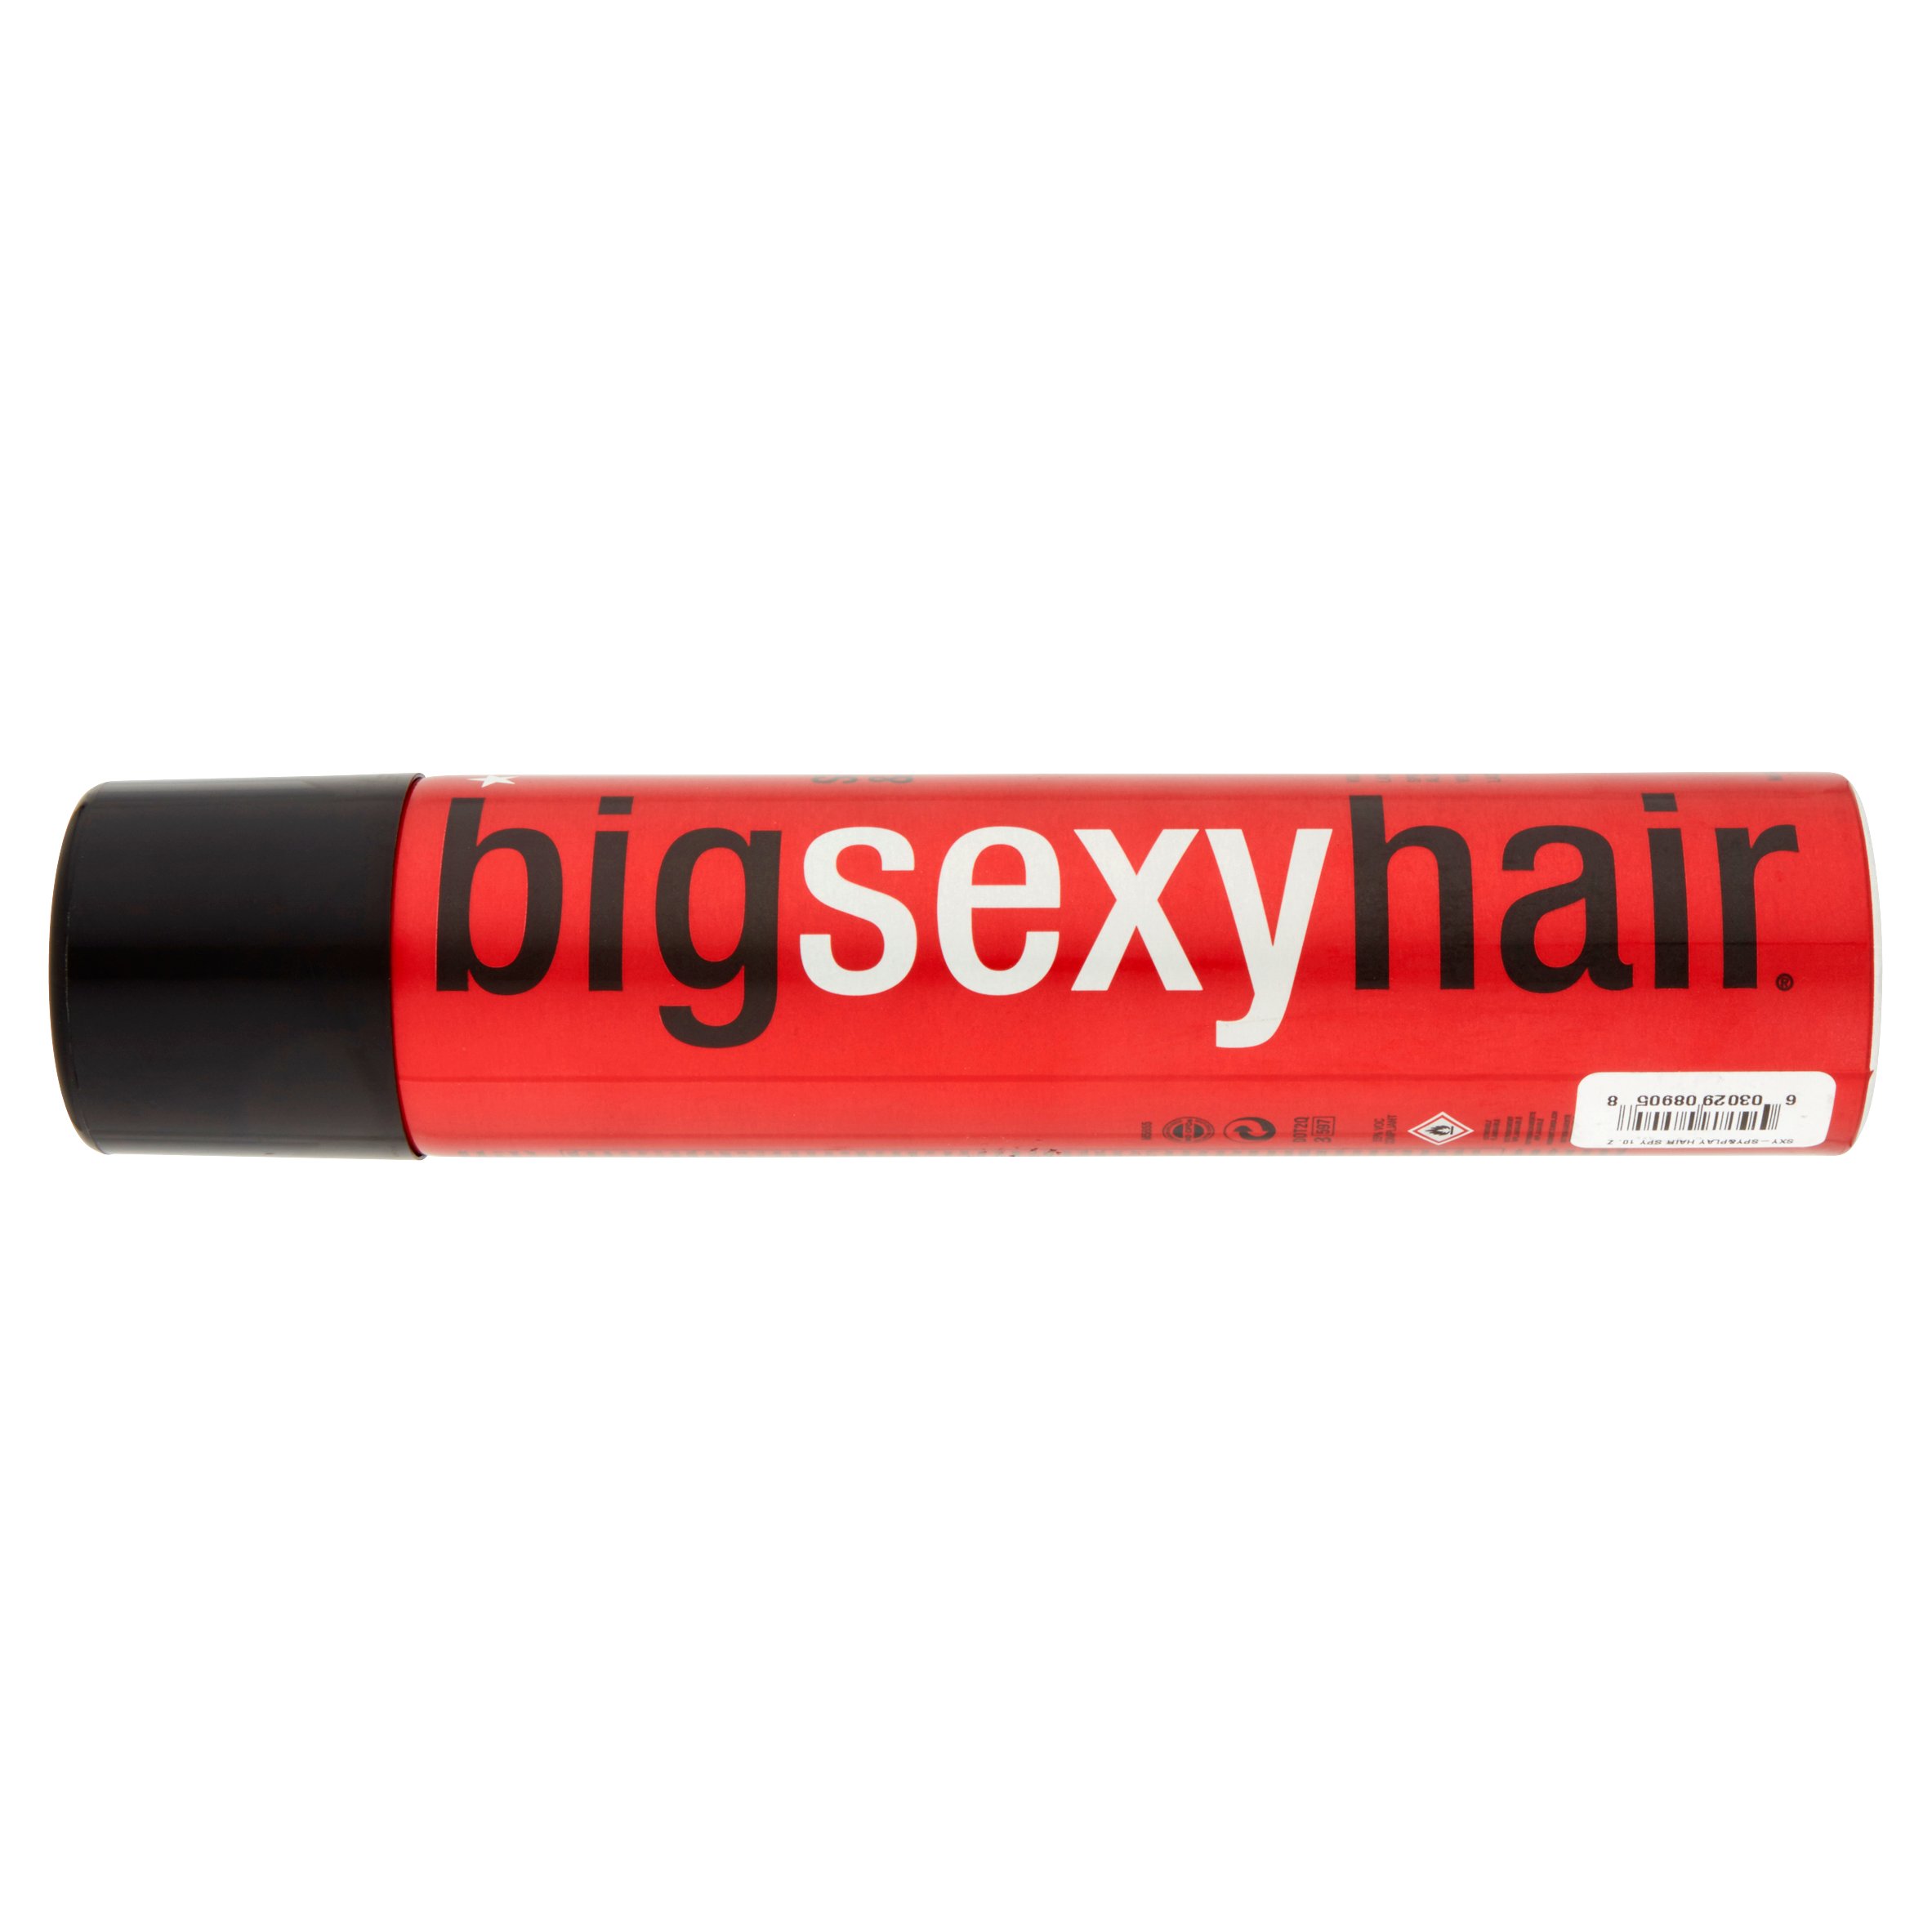 Big Sexy Hair Spray & Play Volumizing Hairspray, 10 oz - image 4 of 6